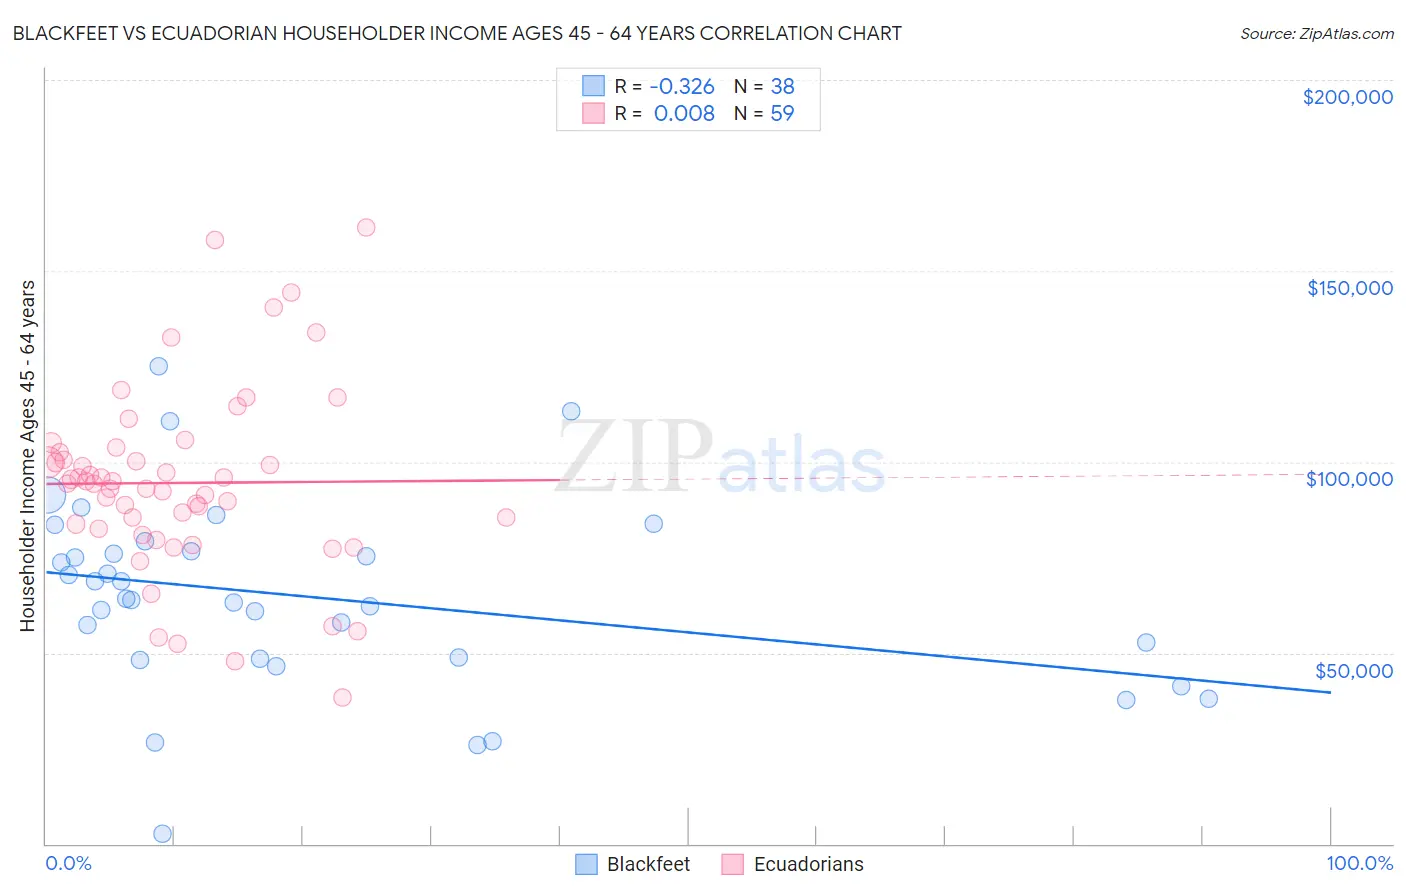 Blackfeet vs Ecuadorian Householder Income Ages 45 - 64 years